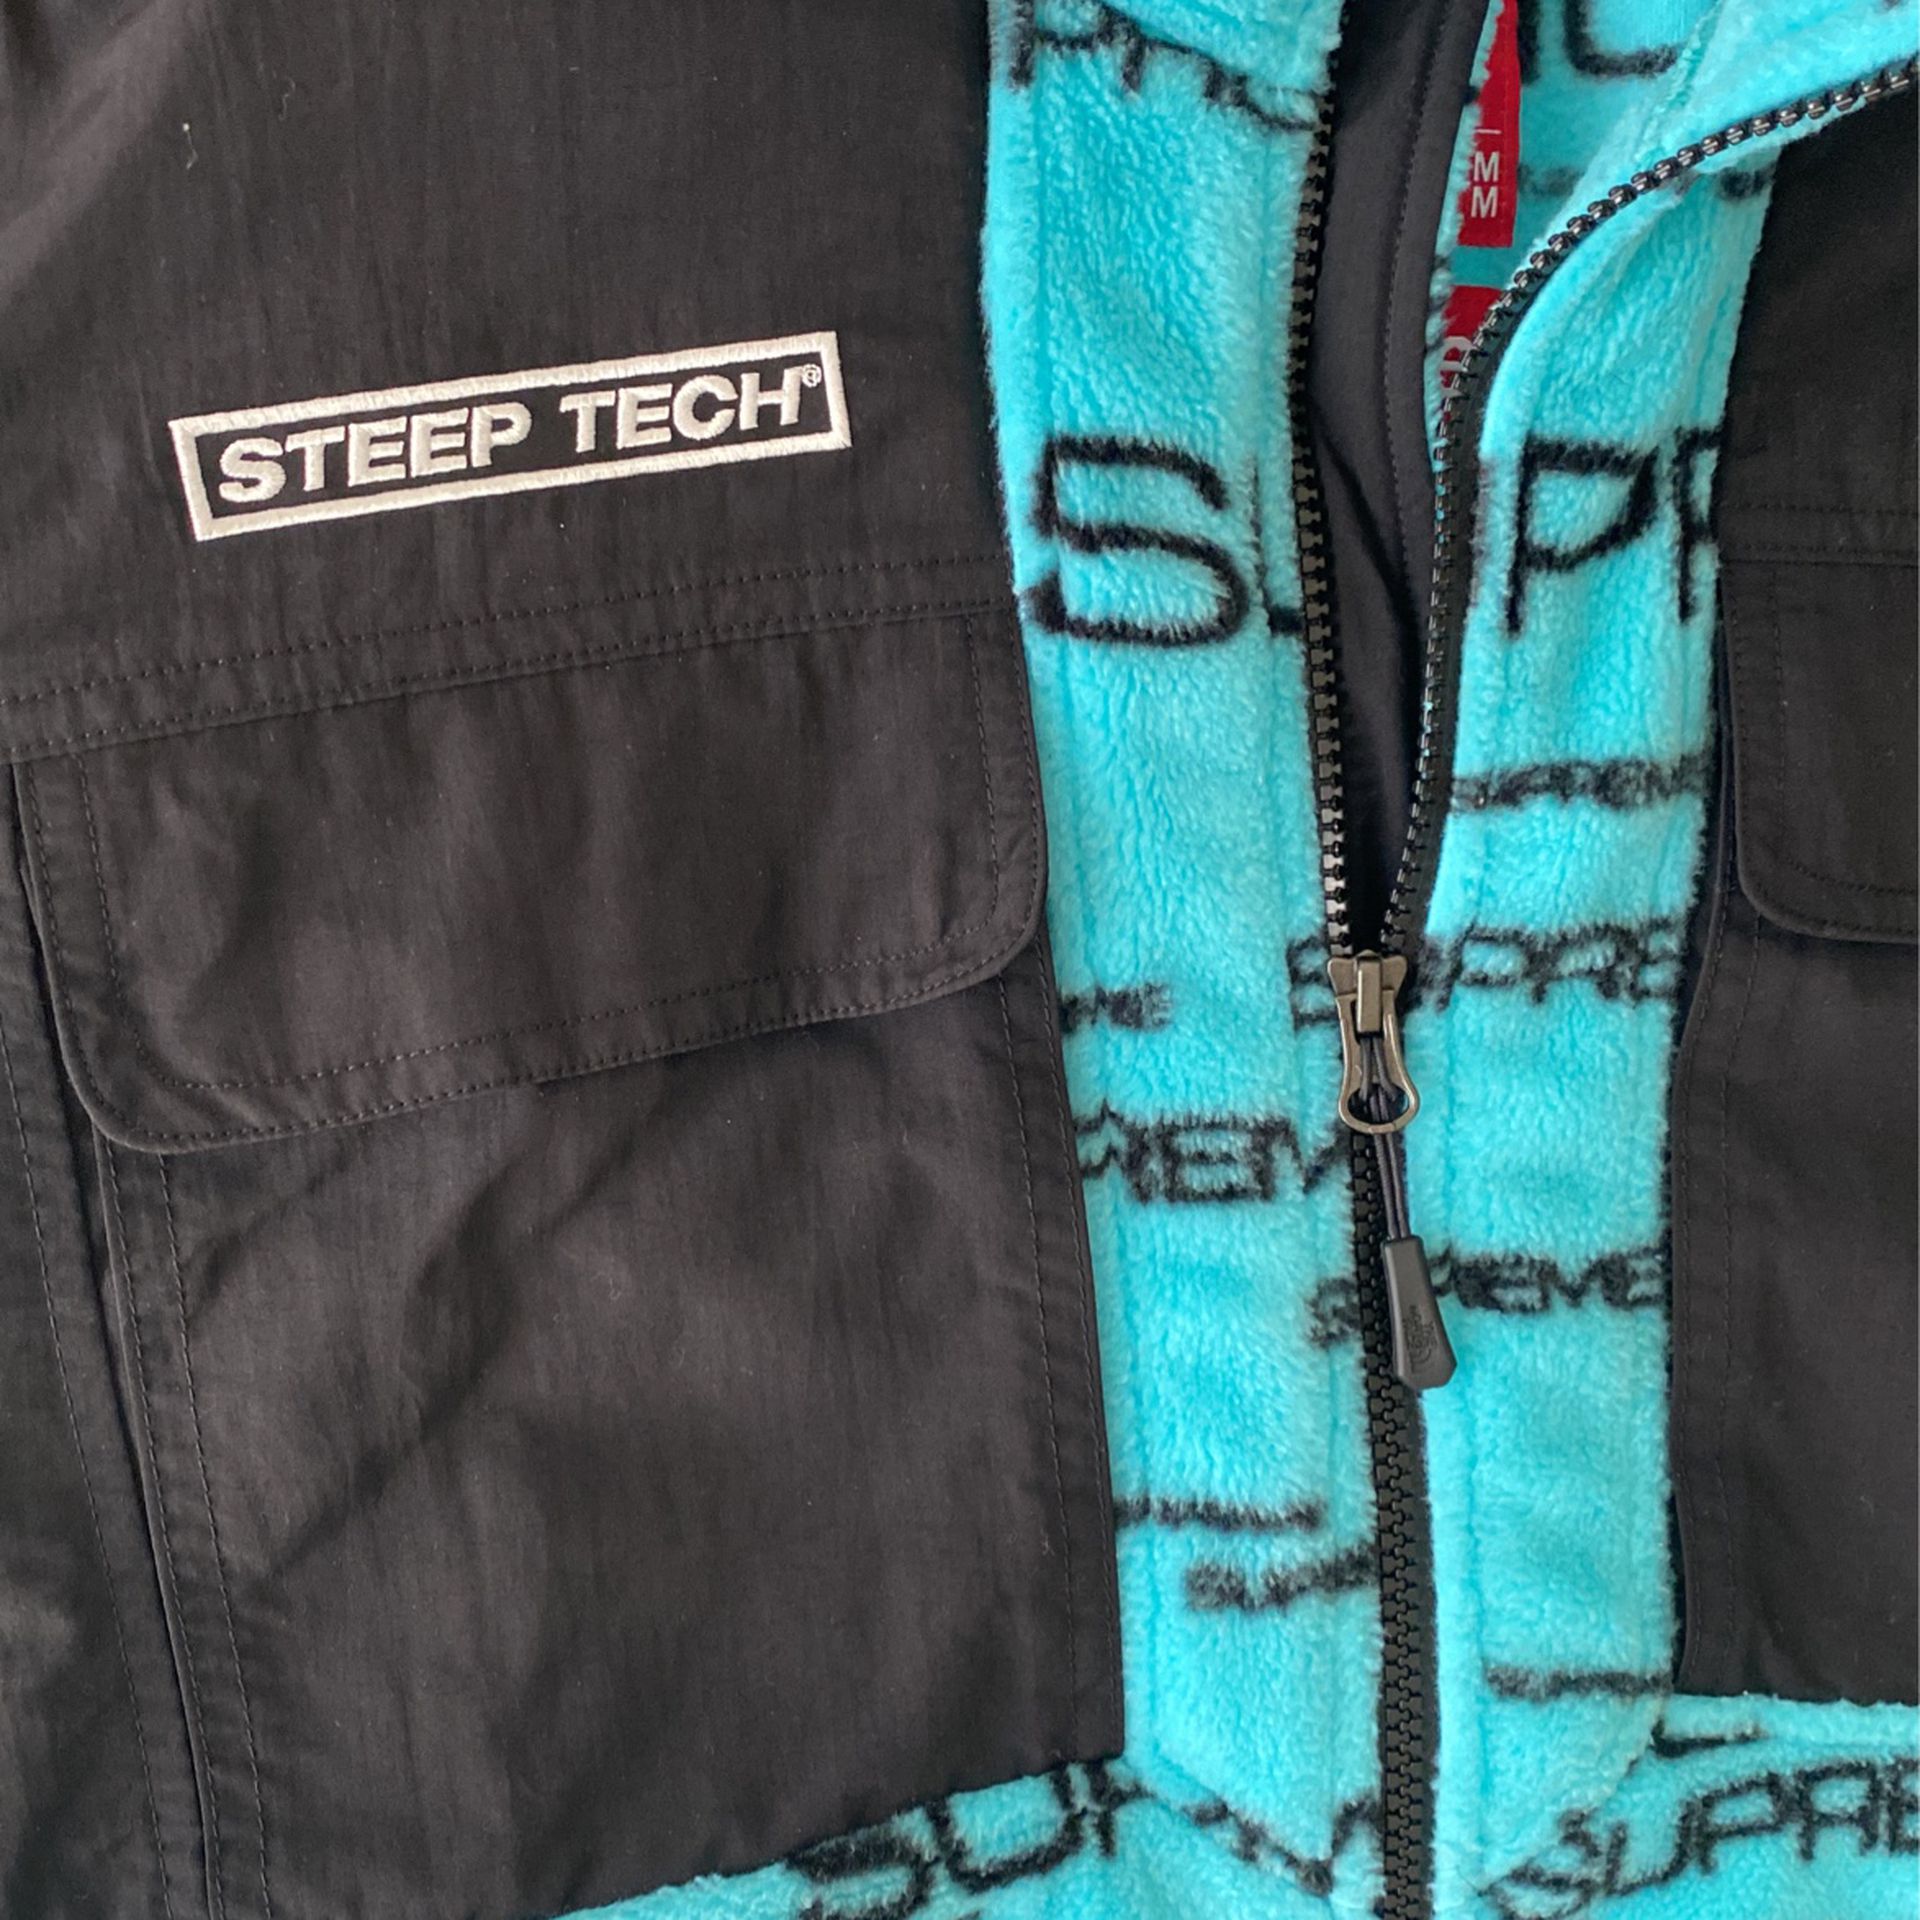 Supreme x The North Face Steep Tech Fleece Jacket